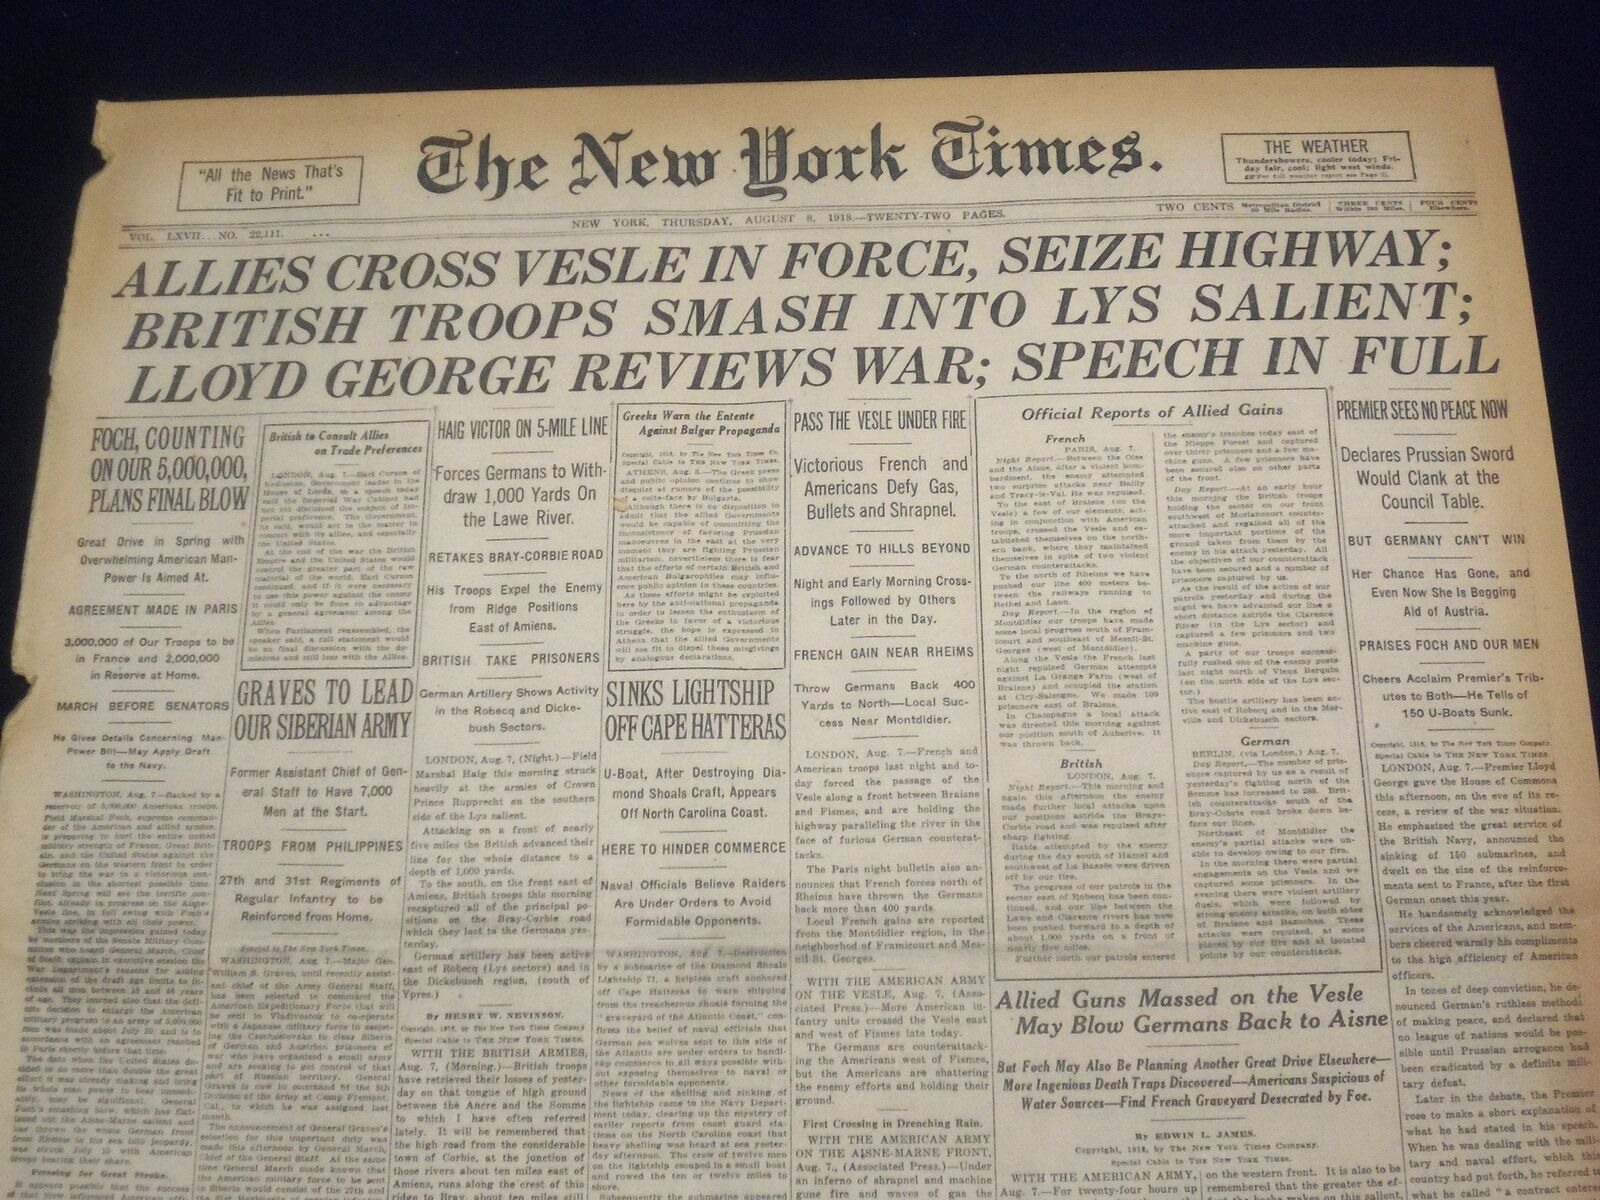 1918 AUGUST 8 NEW YORK TIMES - ALLIES CROSS VESLE IN FORCE - NT 9188